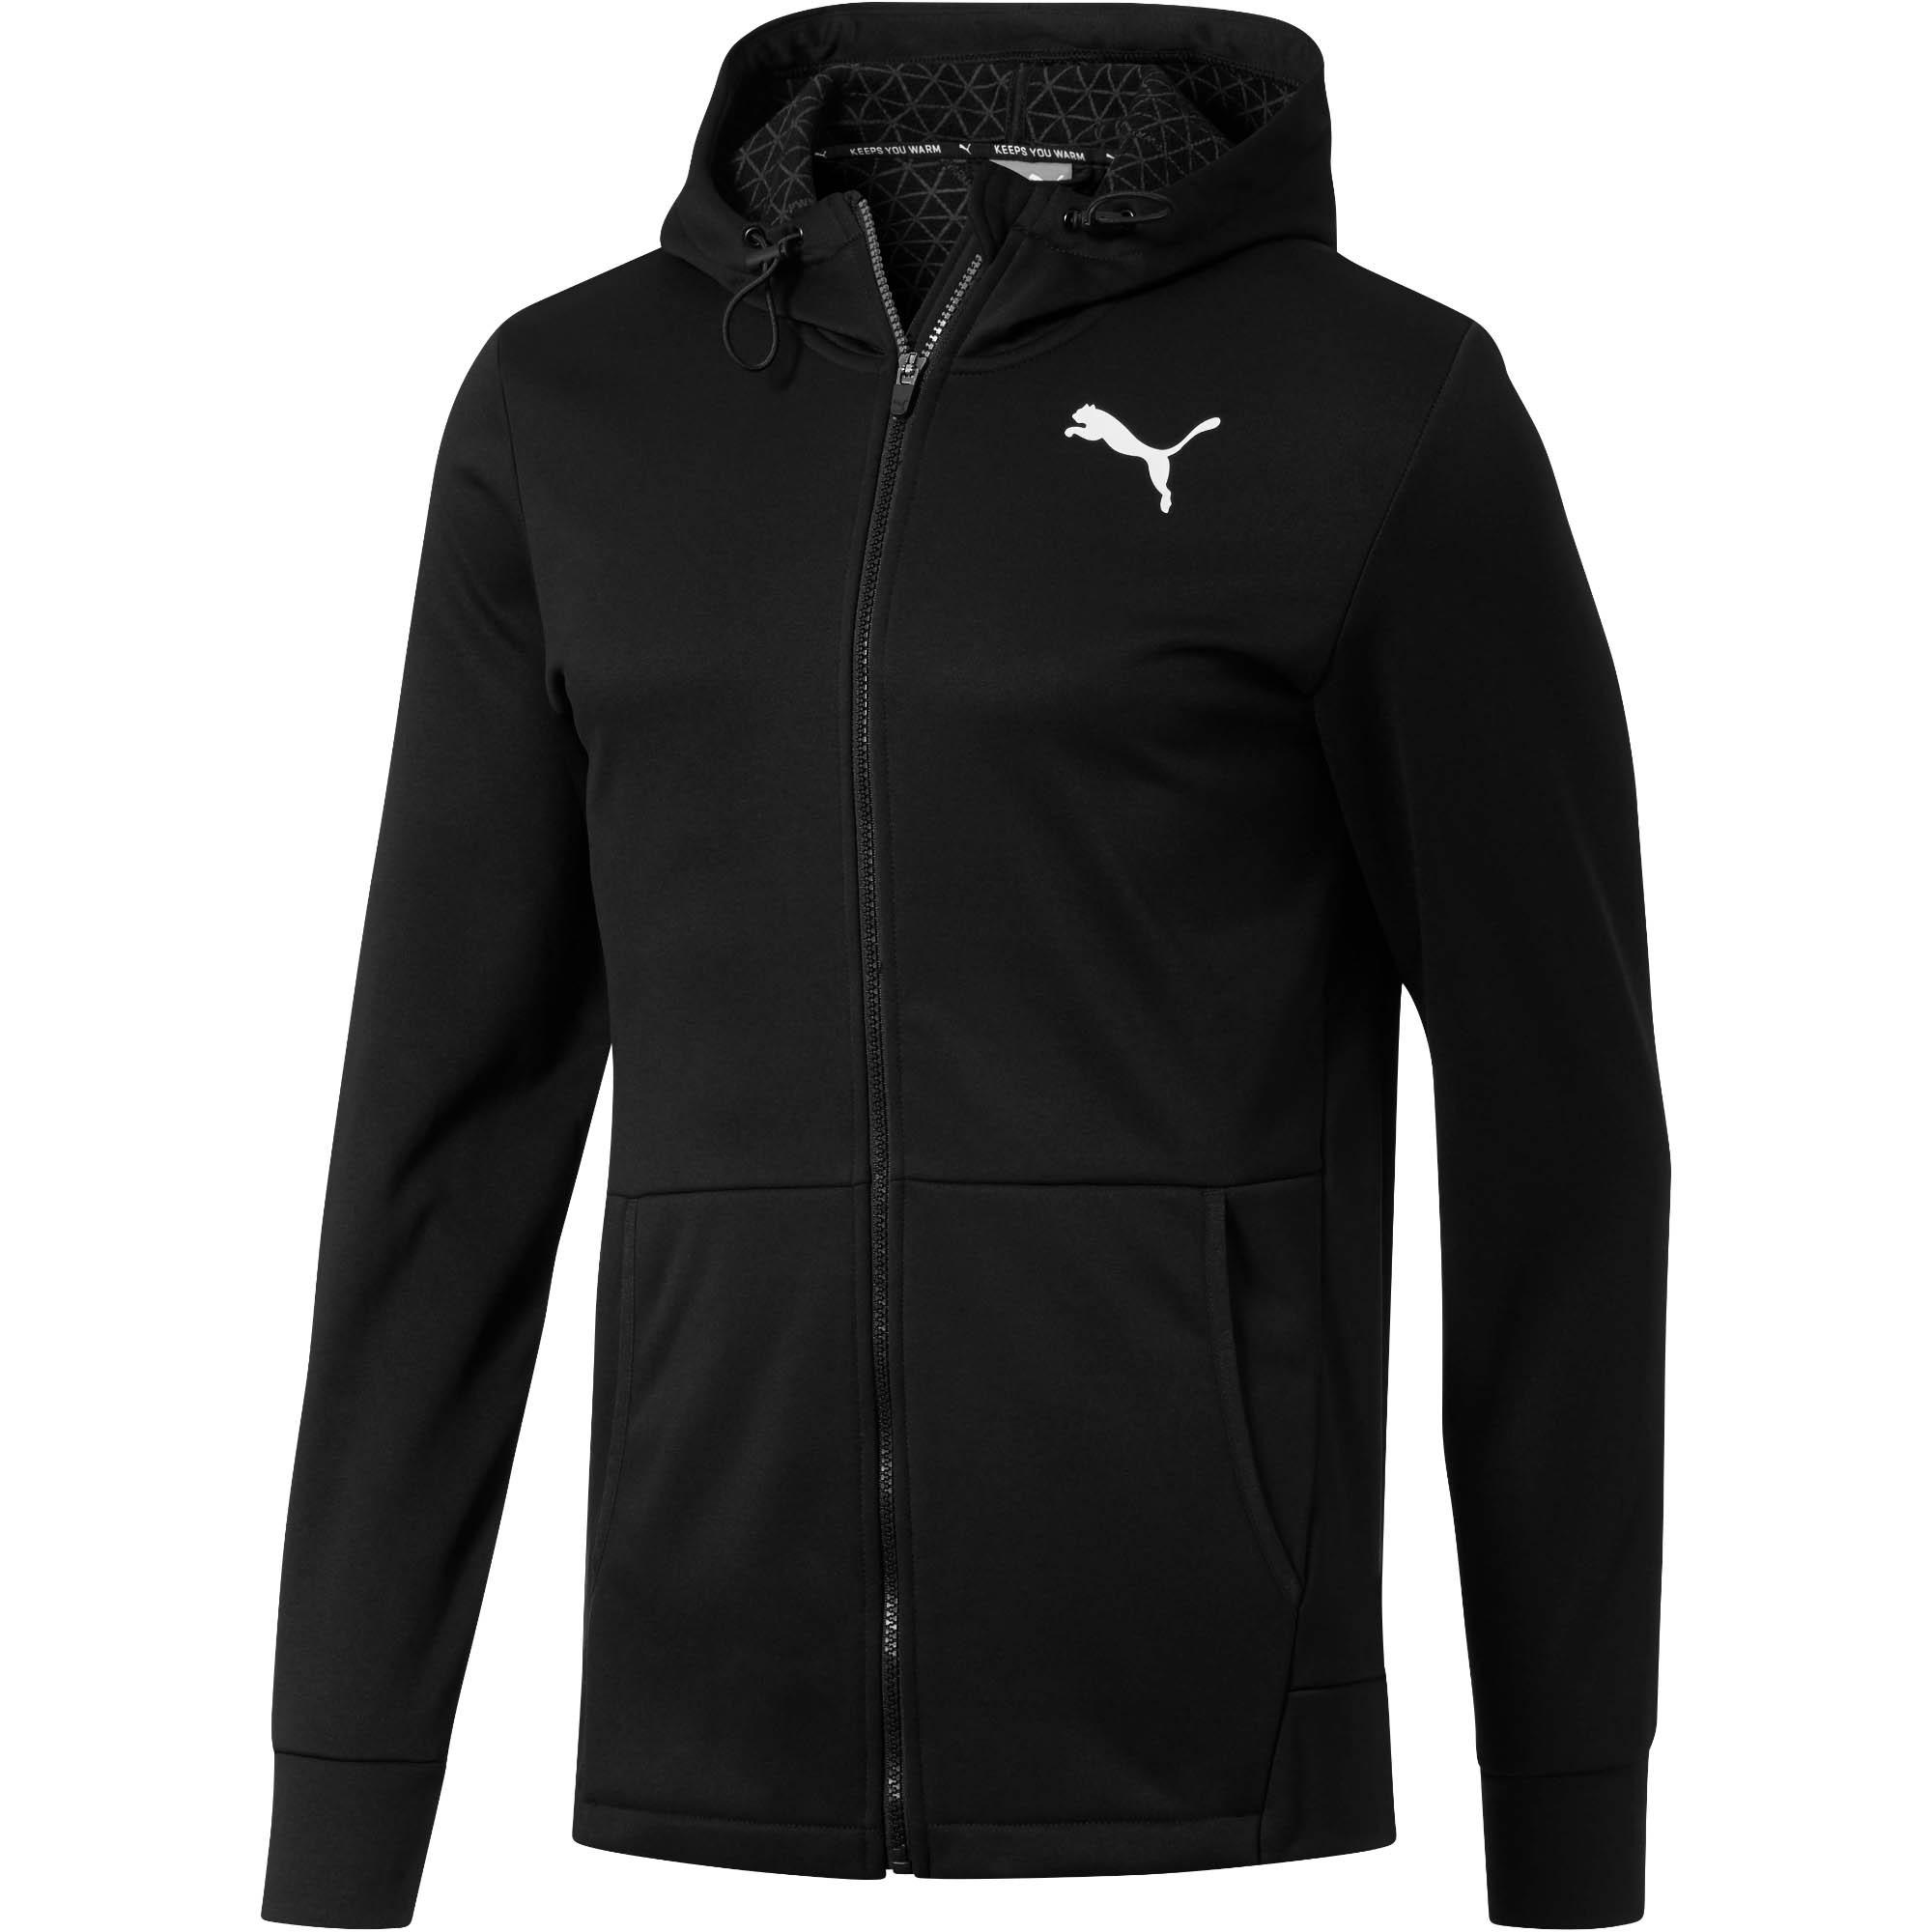 PUMA Synthetic Tec Sports Warm Full-zip Hoodie in Black for Men - Lyst